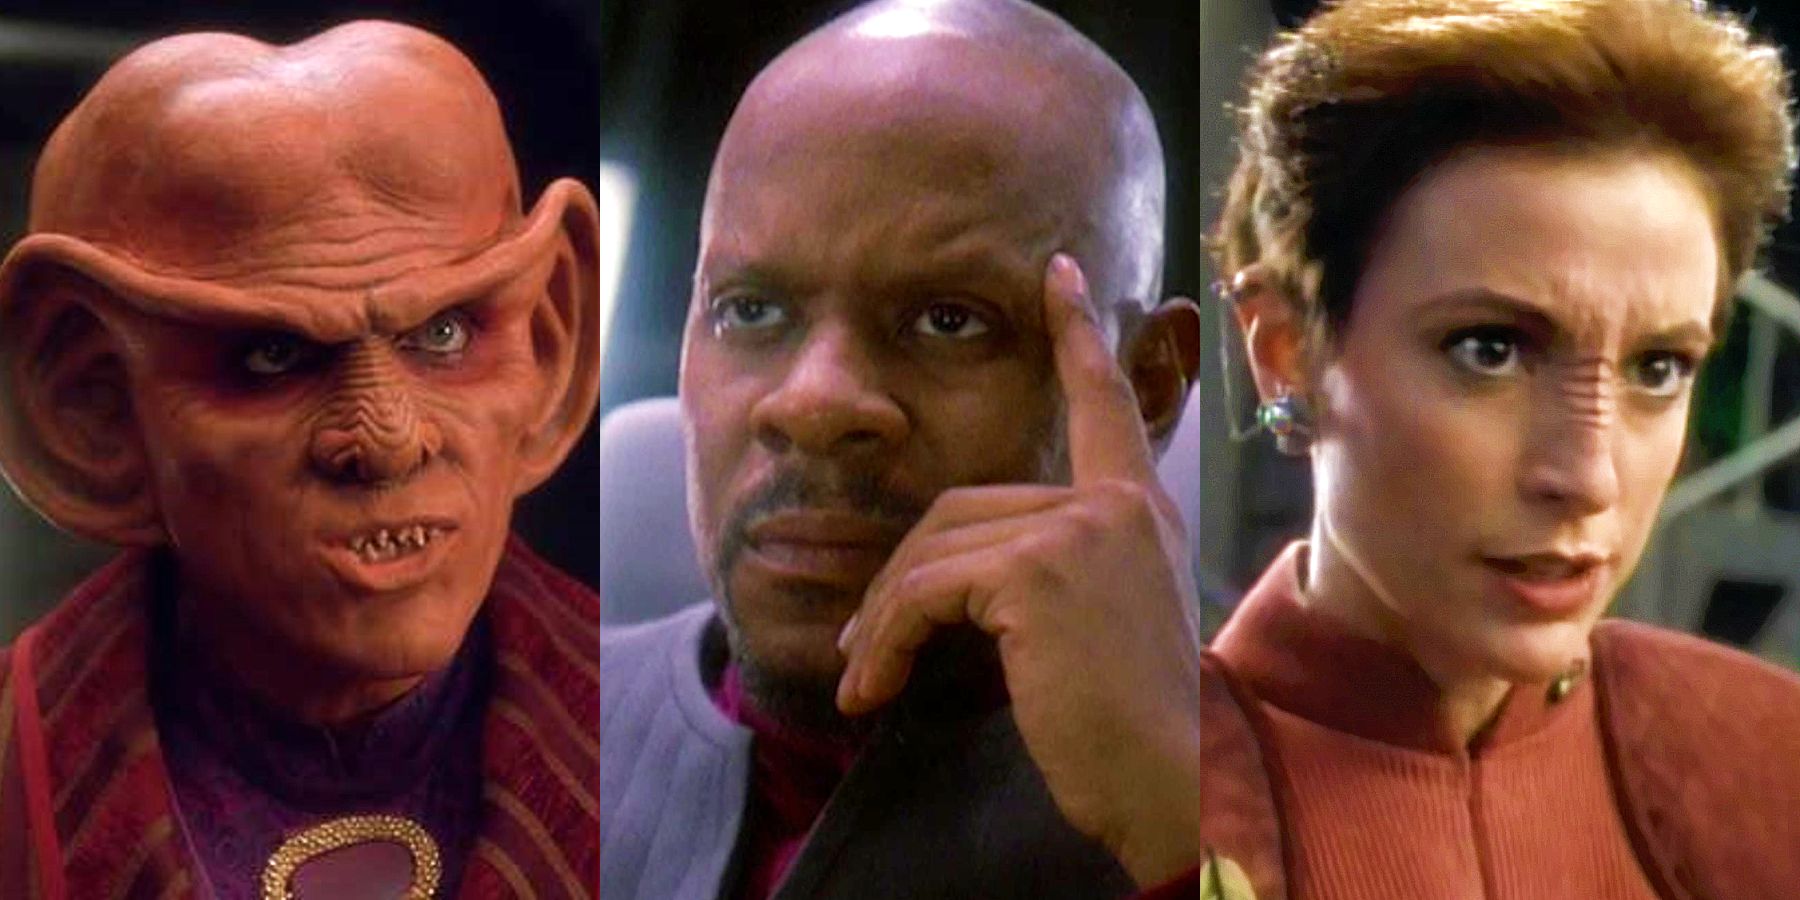 Split image: Close-ups of Quark, Sisko and Kira in scenes from Star Trek: Deep Space Nine.